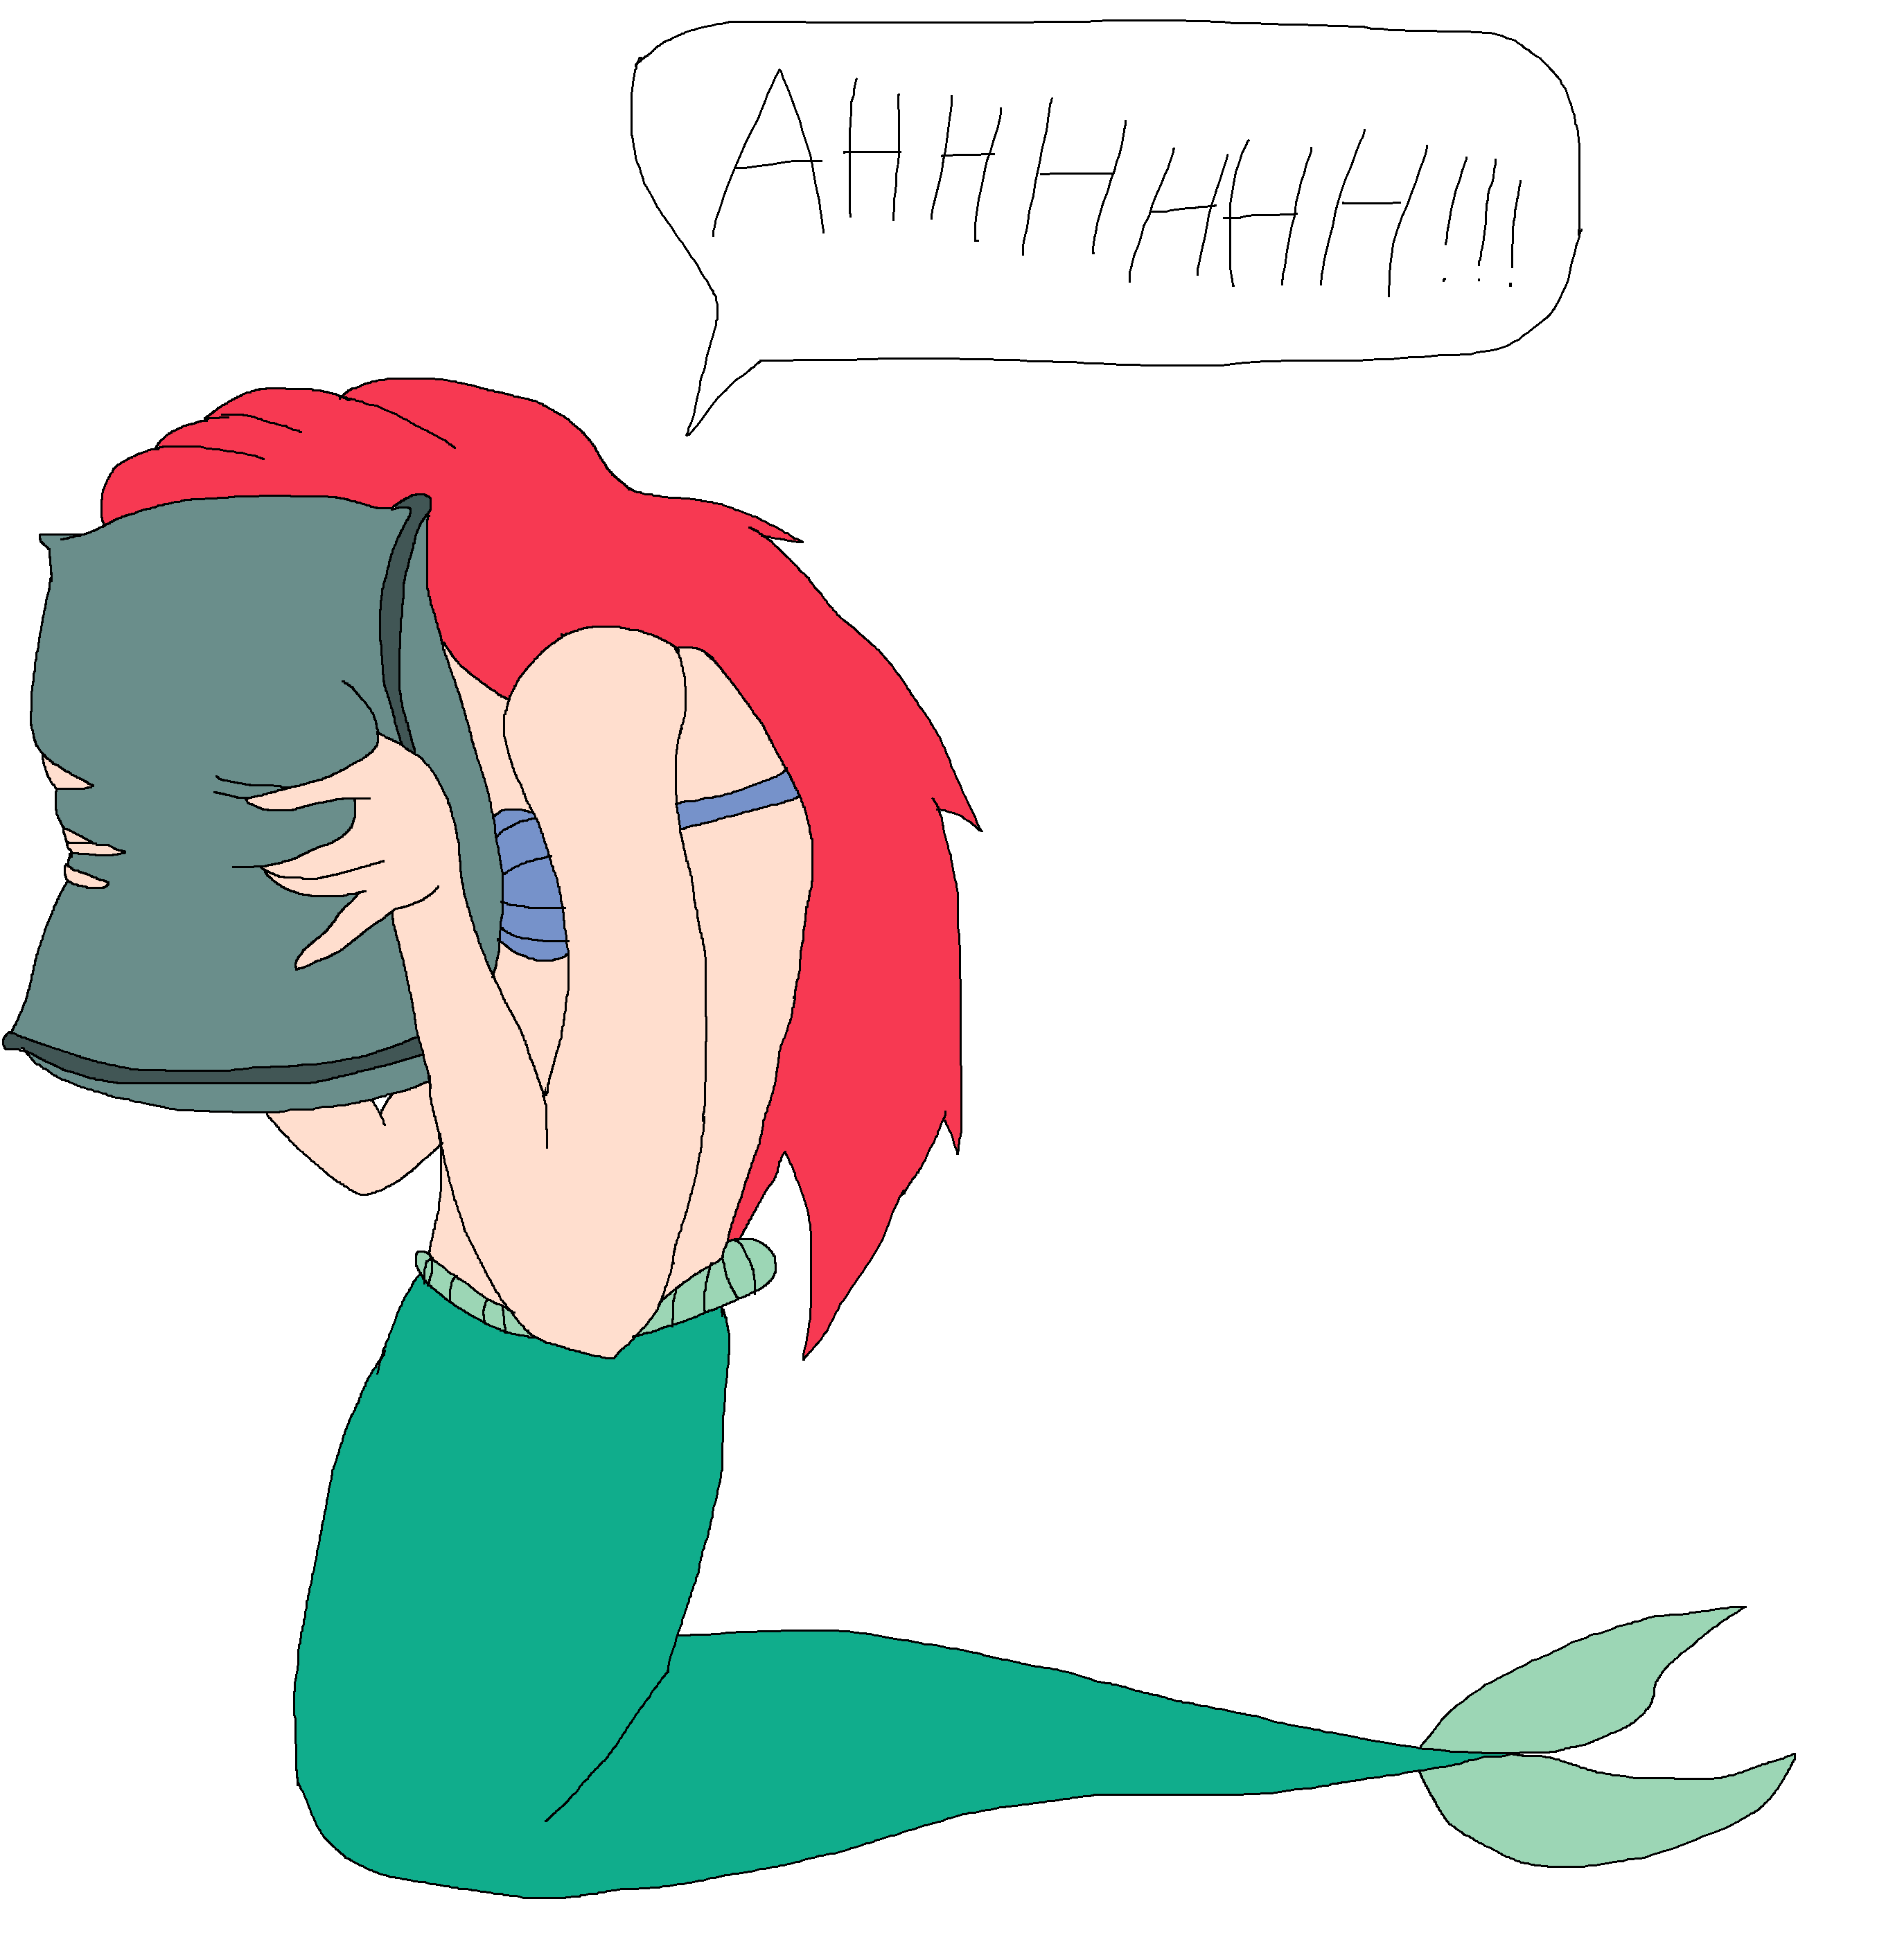 Ariel screaming into pillow by Rainbow-Dash-Rockz